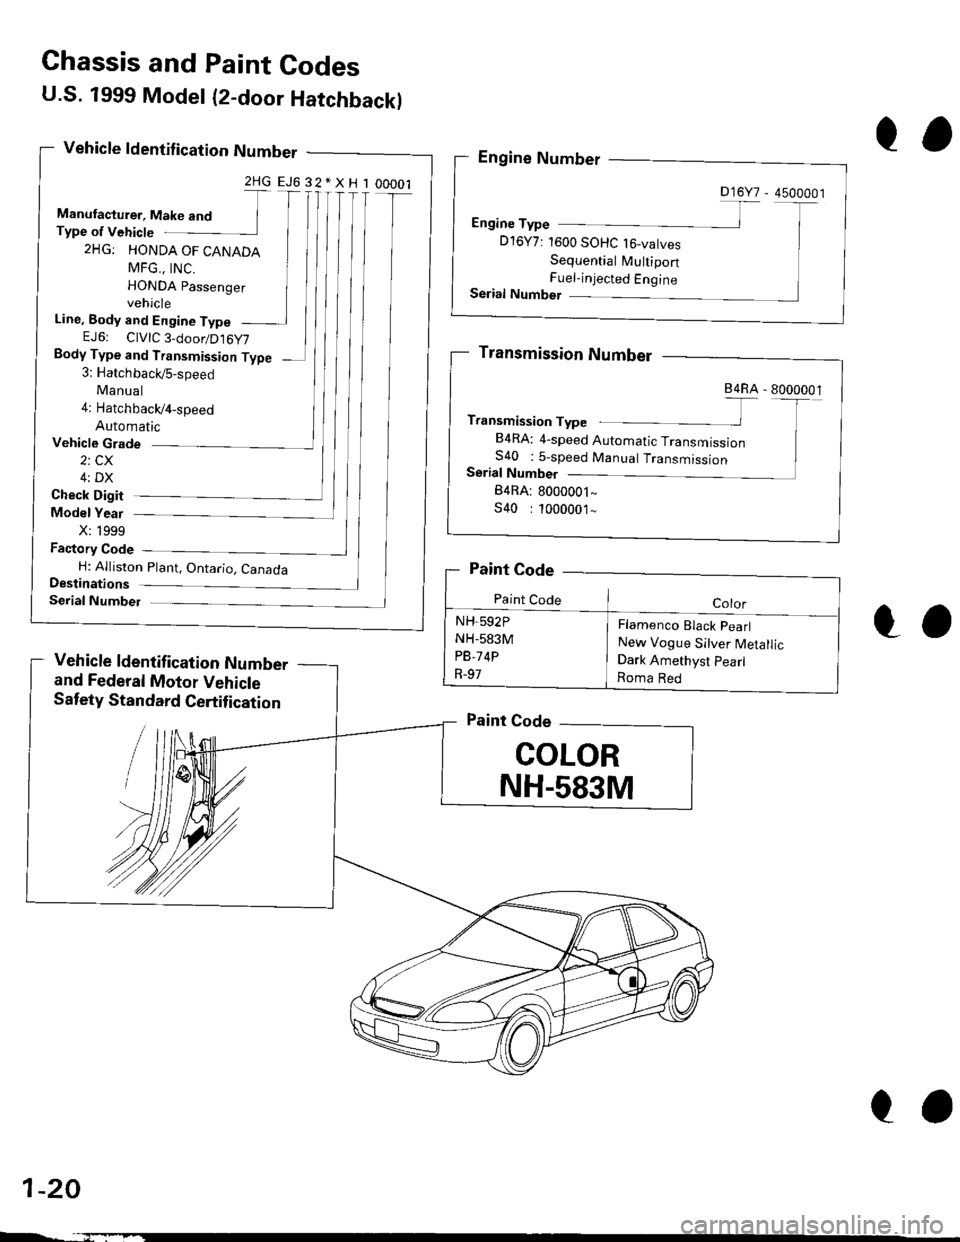 HONDA CIVIC 1997 6.G Owners Manual U.S. 1999 Model (2-door Hatchbackl
Vehicle ldentif ication Number
2HGEJ632*XH100001
Manufacturer, Make and TType of Vehicte
2HG: HONDA OF CANADA
MFG.. tNC. IHONDA passenger Ivehicle
Line, Body and Eng